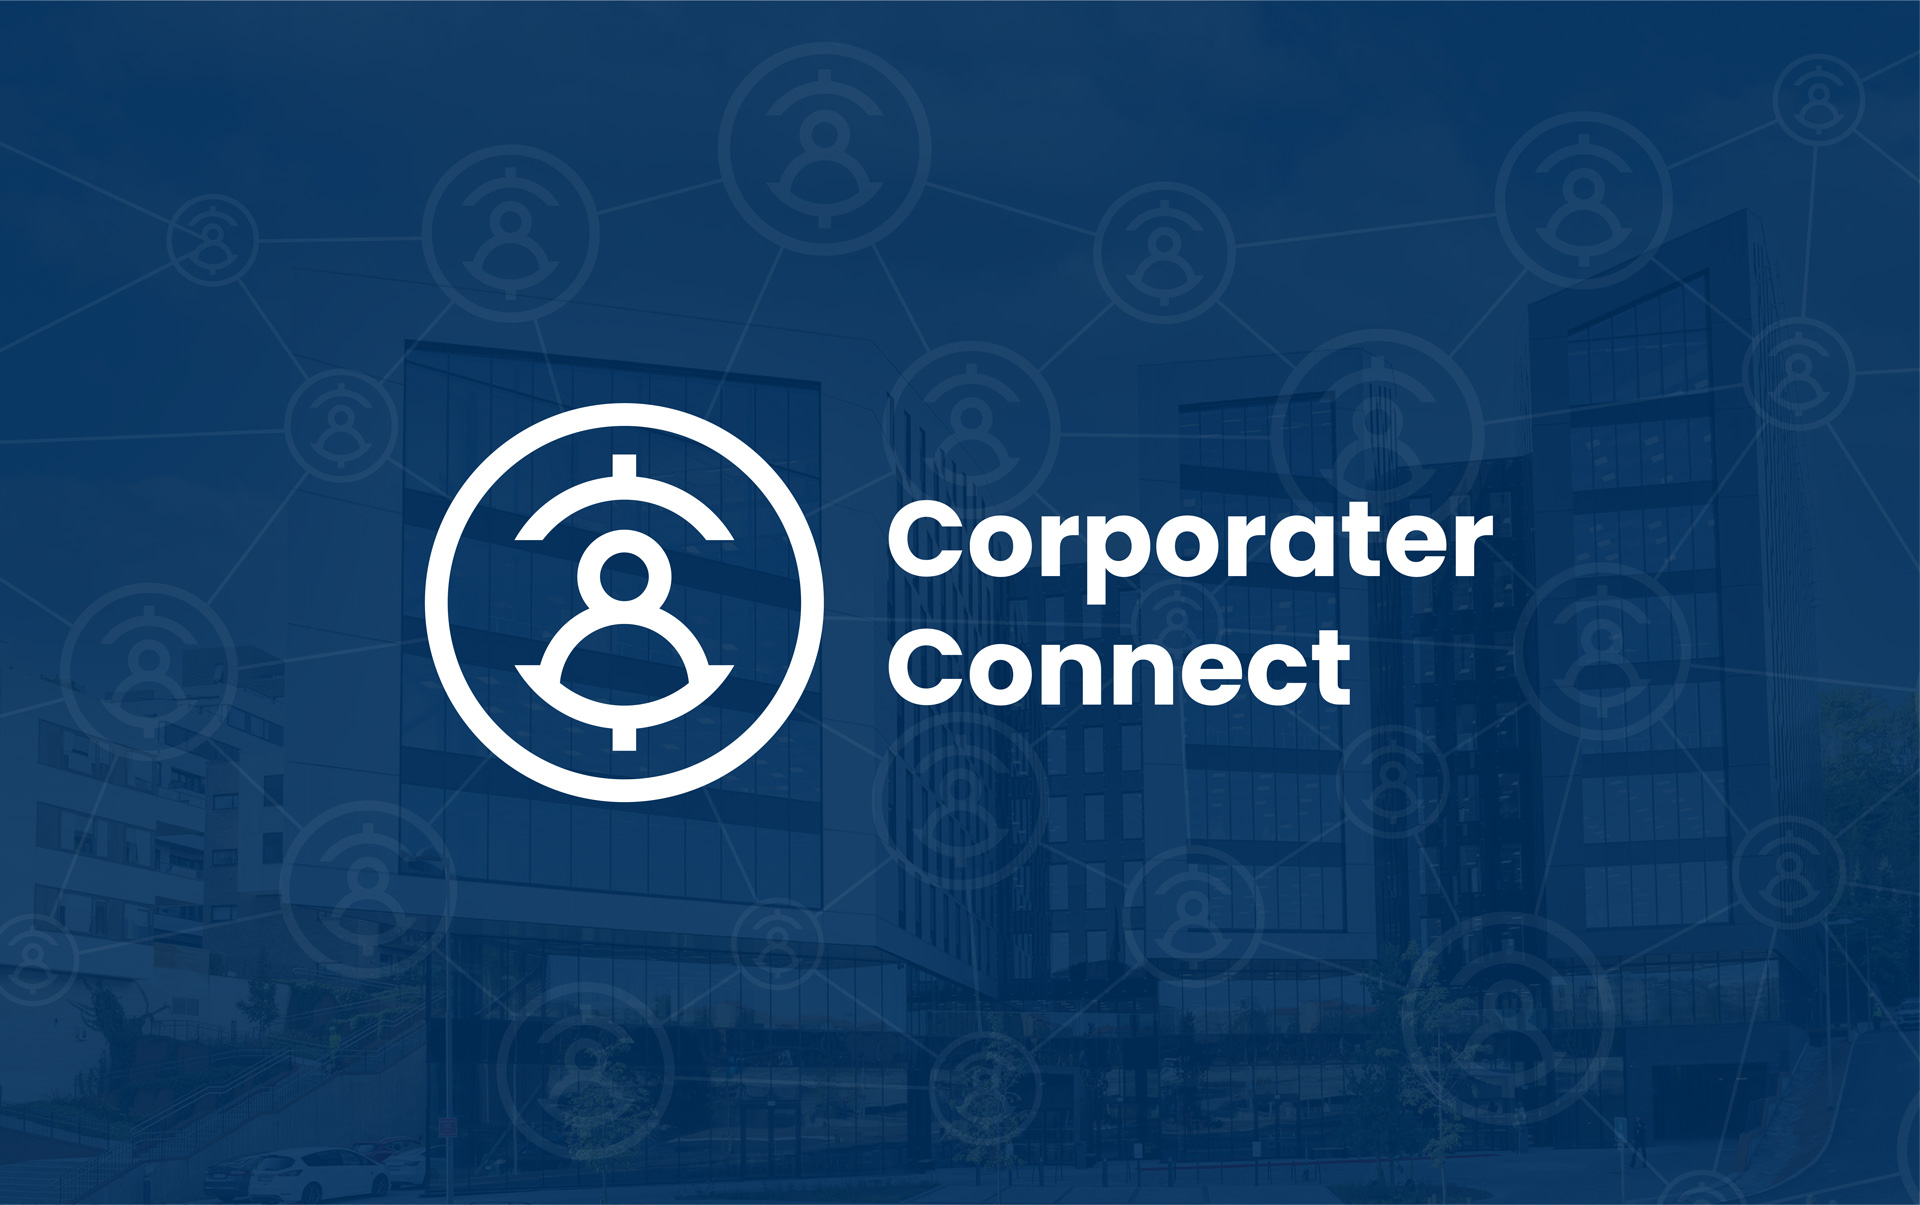 CorporaterConnect_OsloK